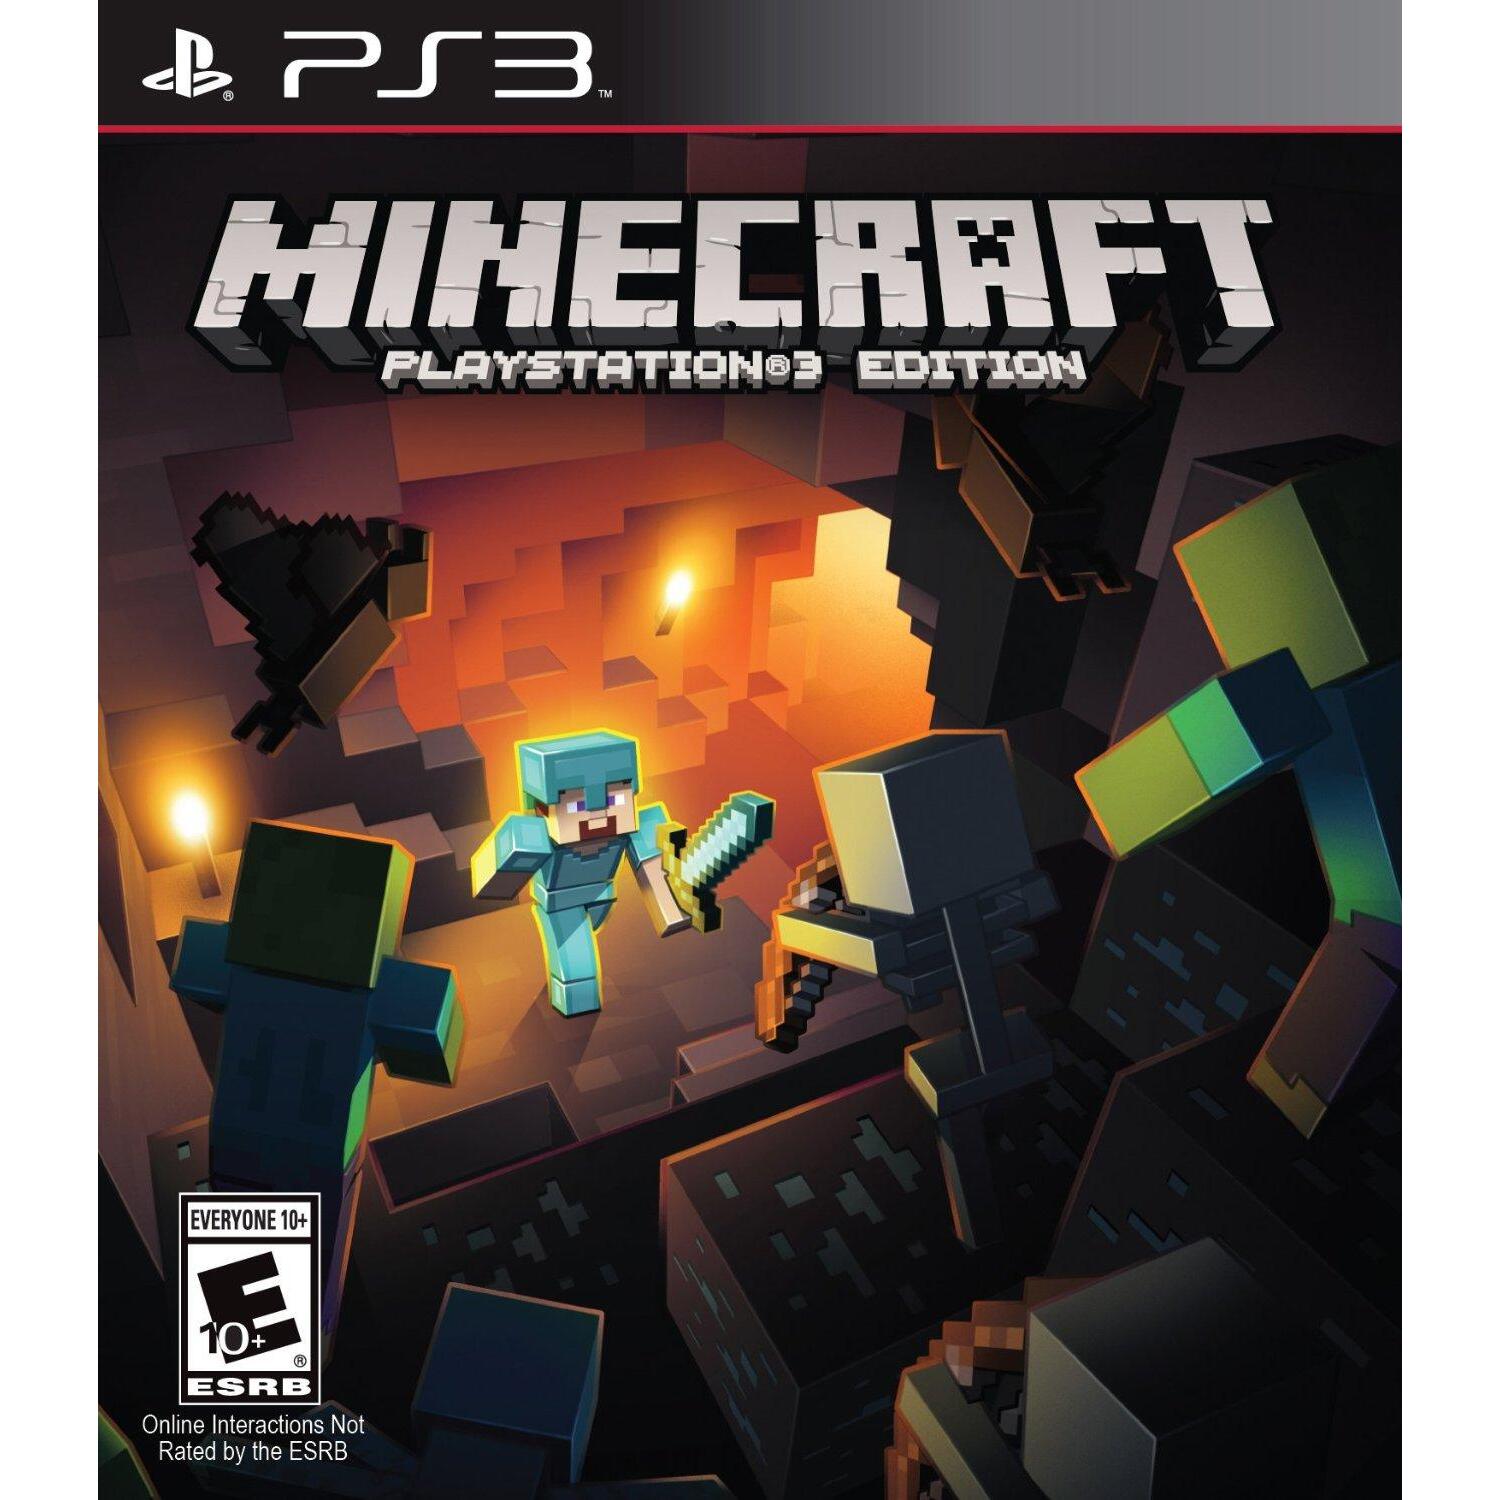 Darmen recept Logisch Minecraft - PlayStation 3 Edition (PS3) | €19.99 | Goedkoop!